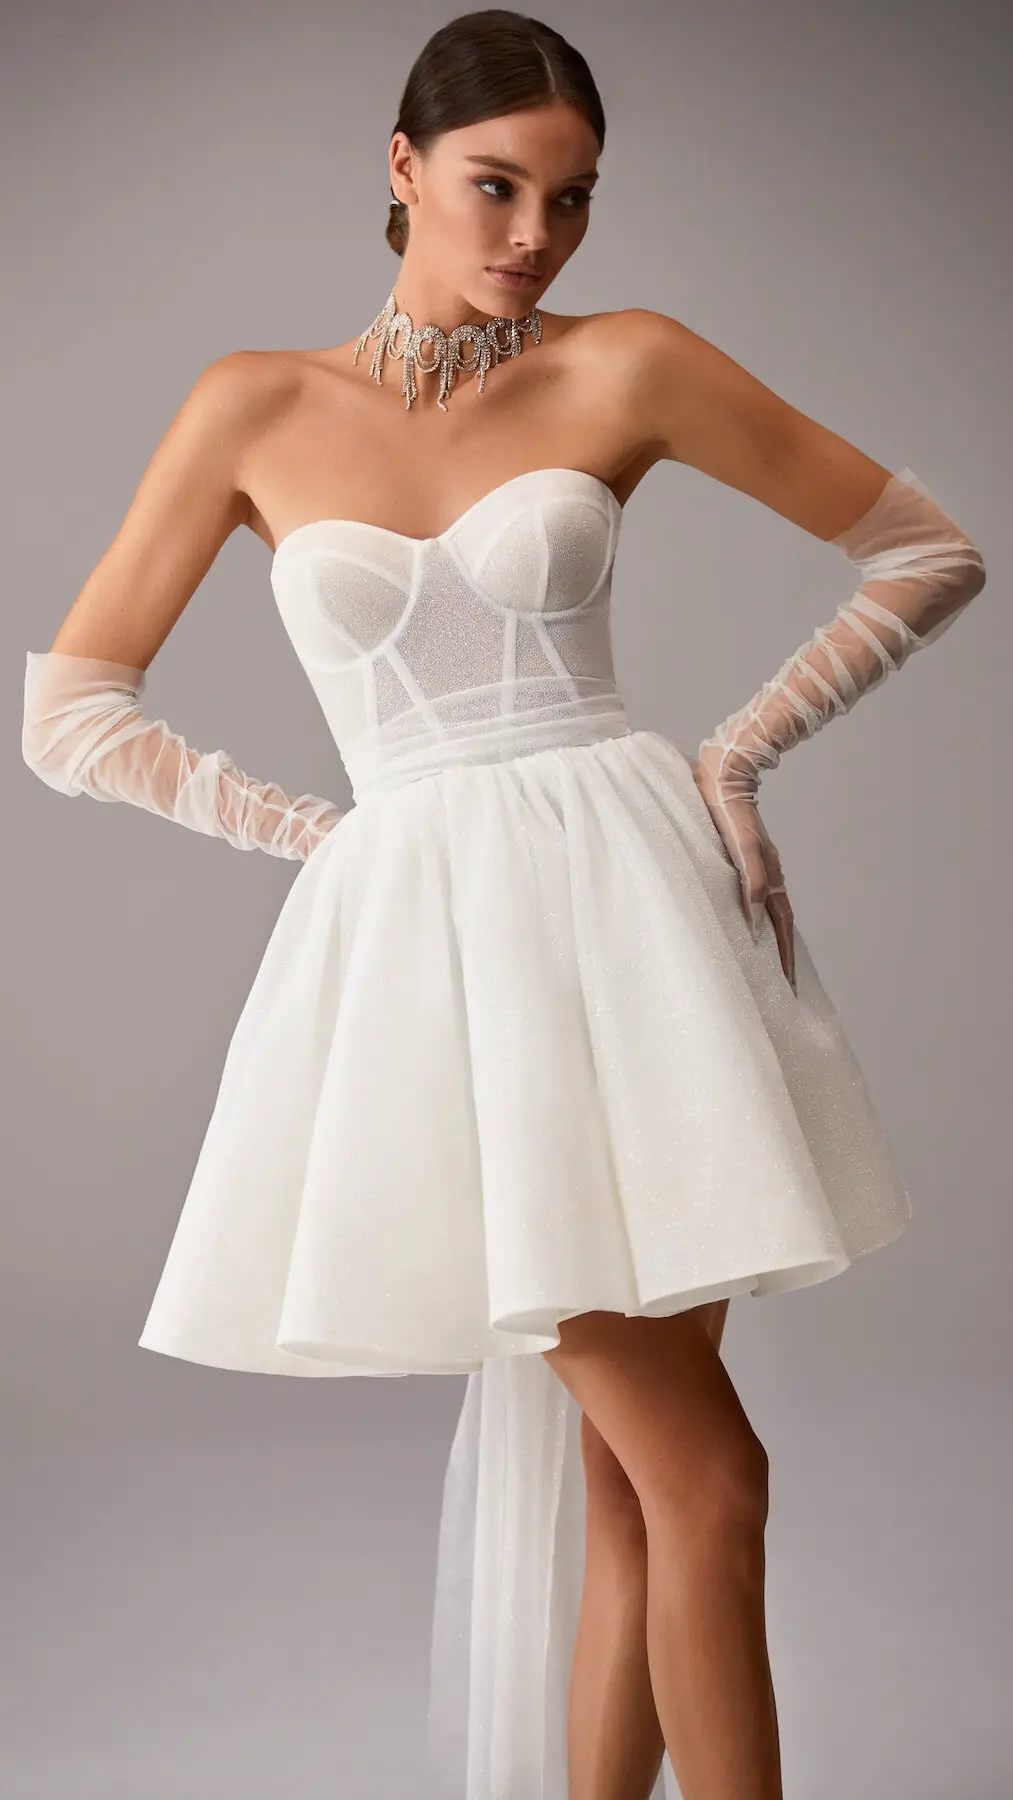 Strapless short Wedding Dress by Milla Nova - Mira White Lace